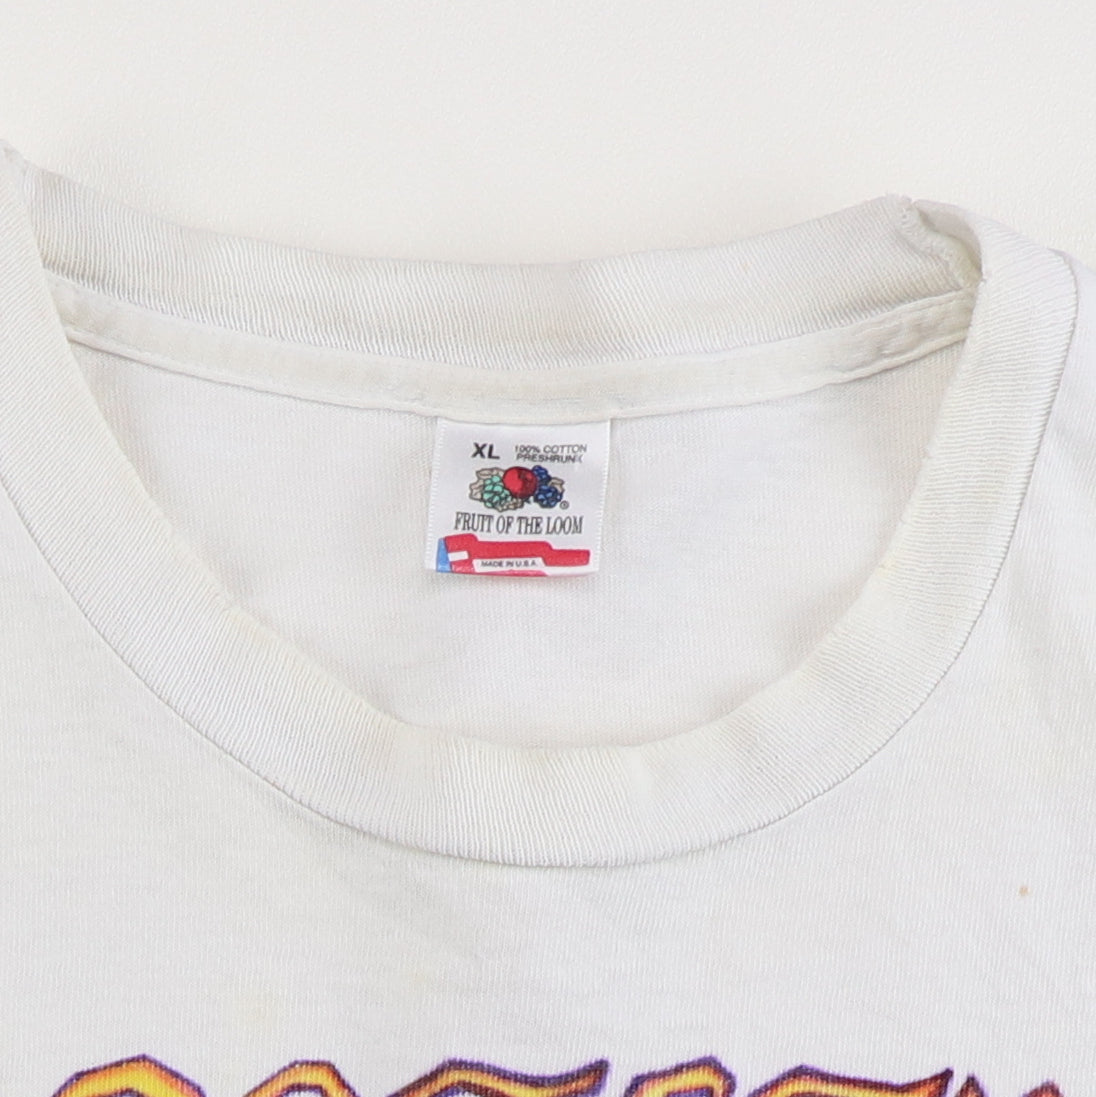 1991 Grateful Dead 25 Years Air Brush Shirt